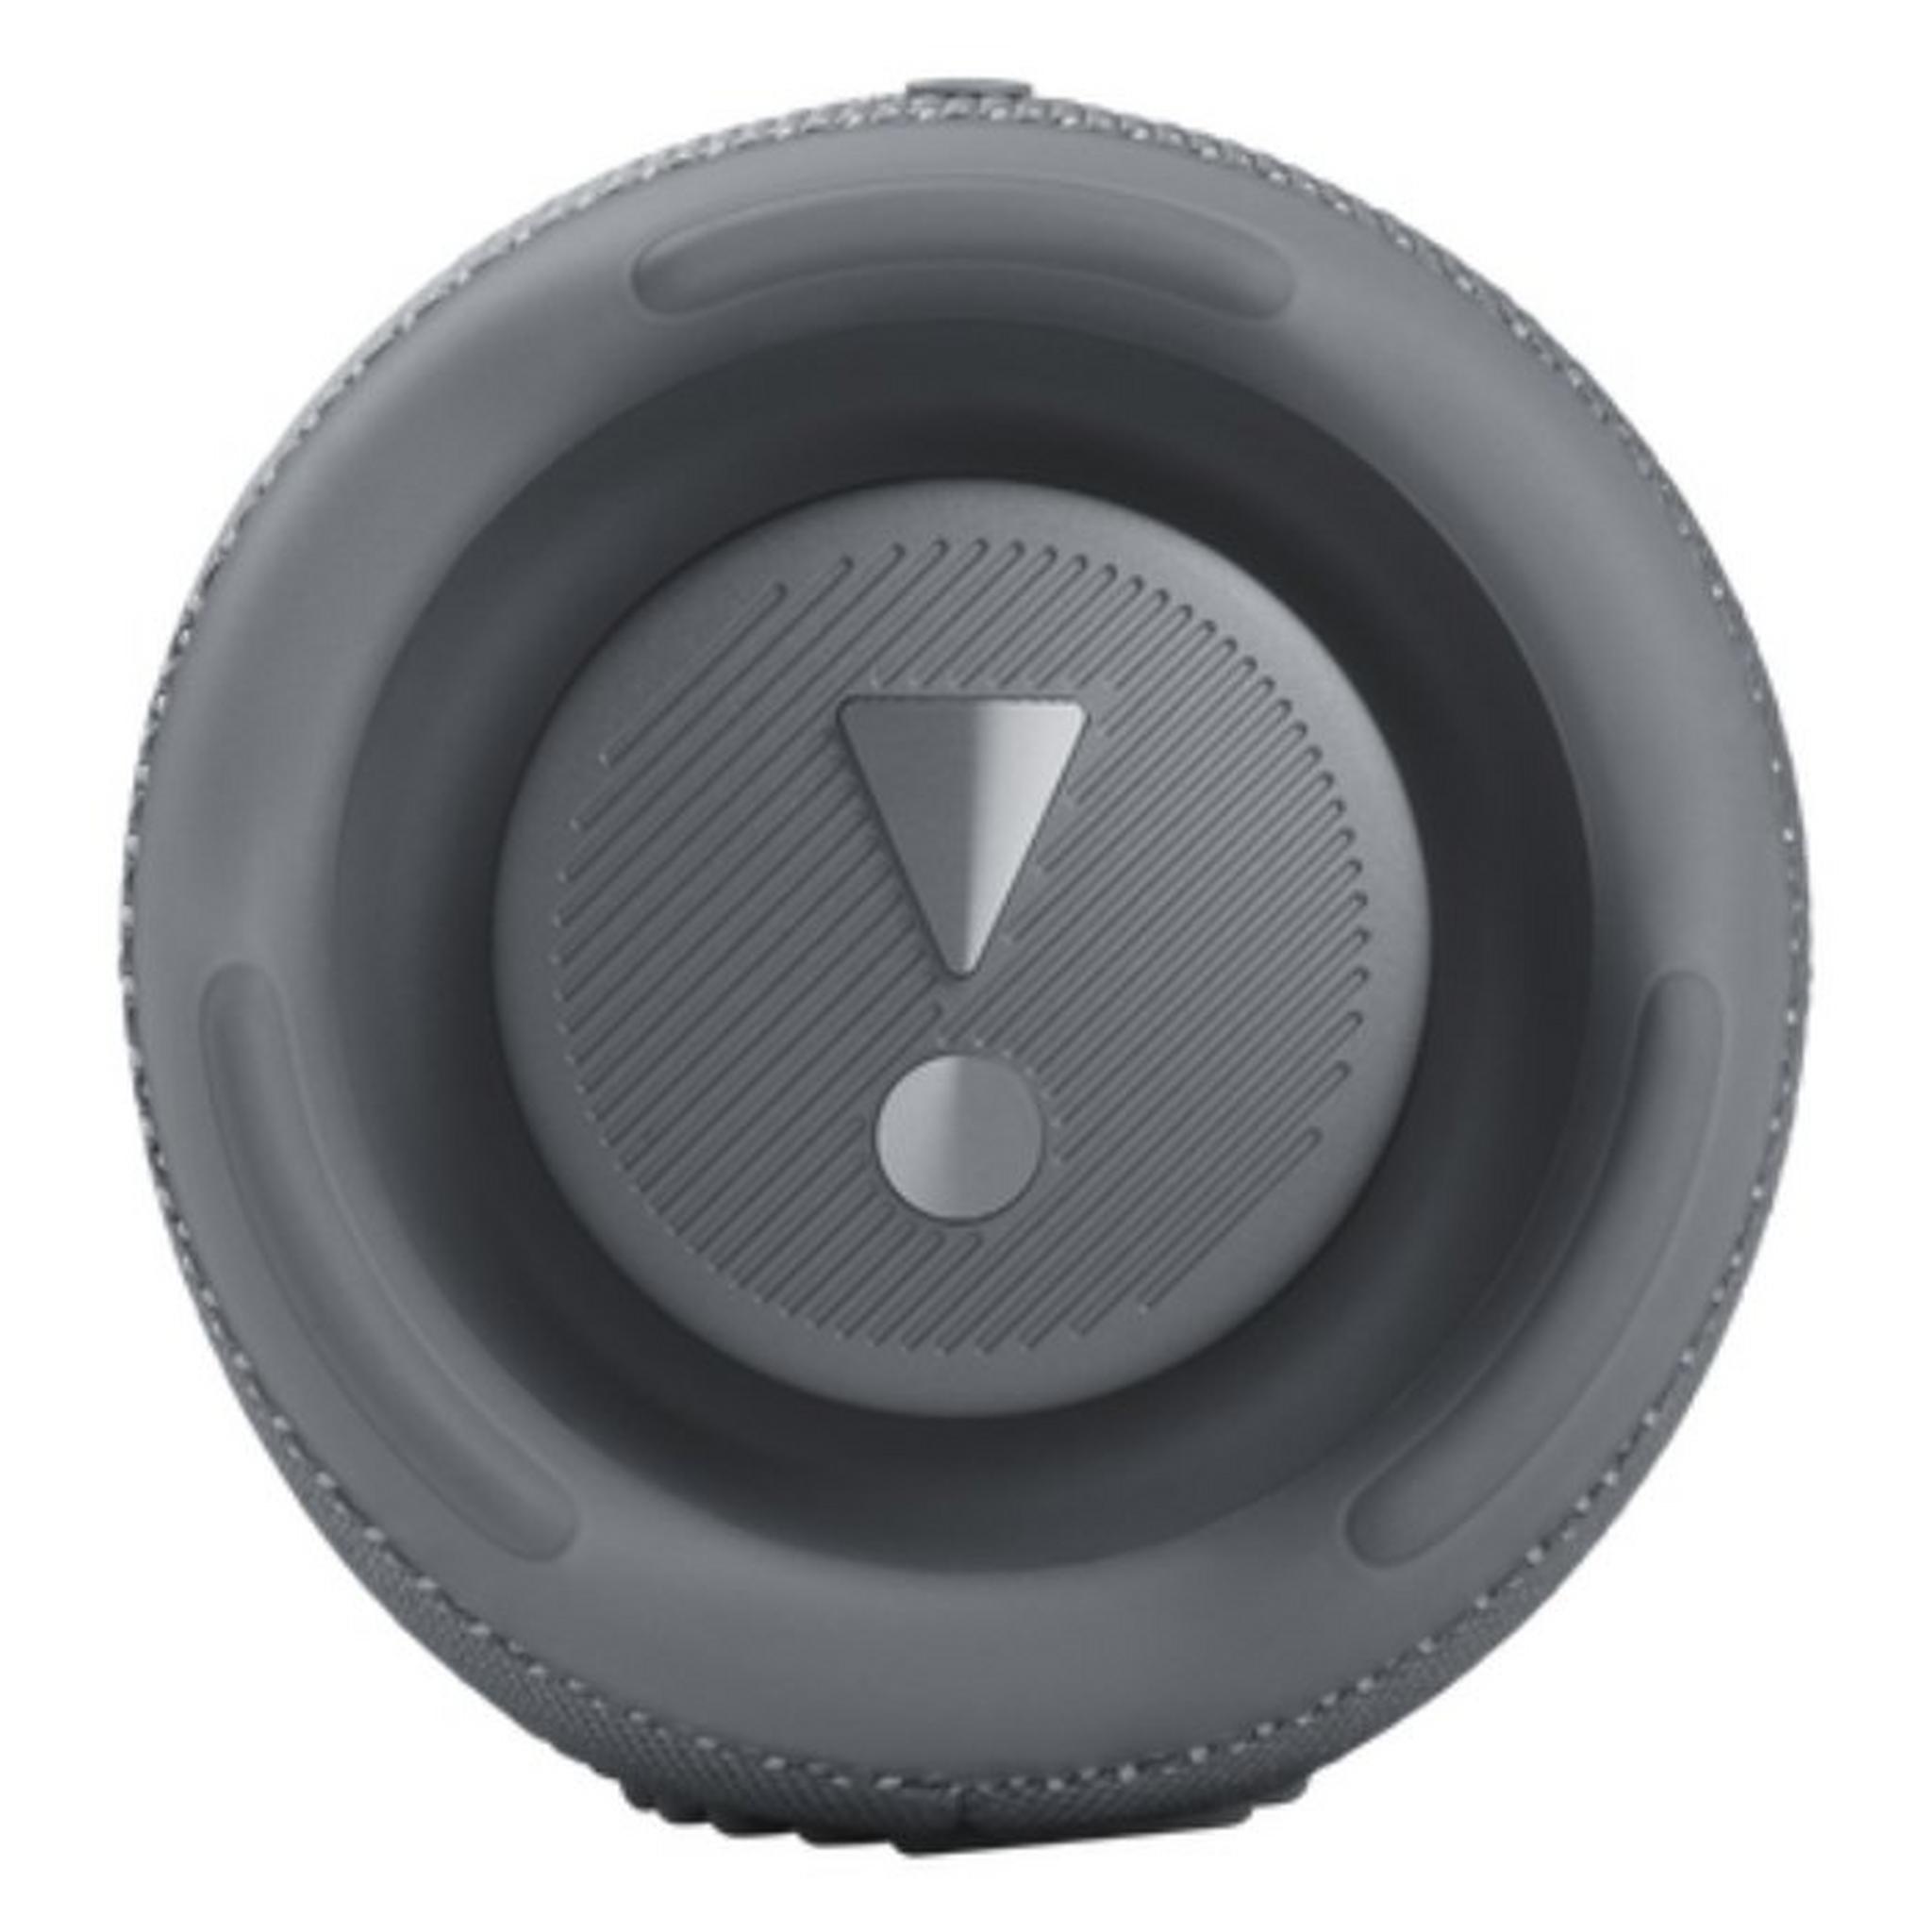 JBL Charge 5 Waterproof Wireless Speaker - Grey